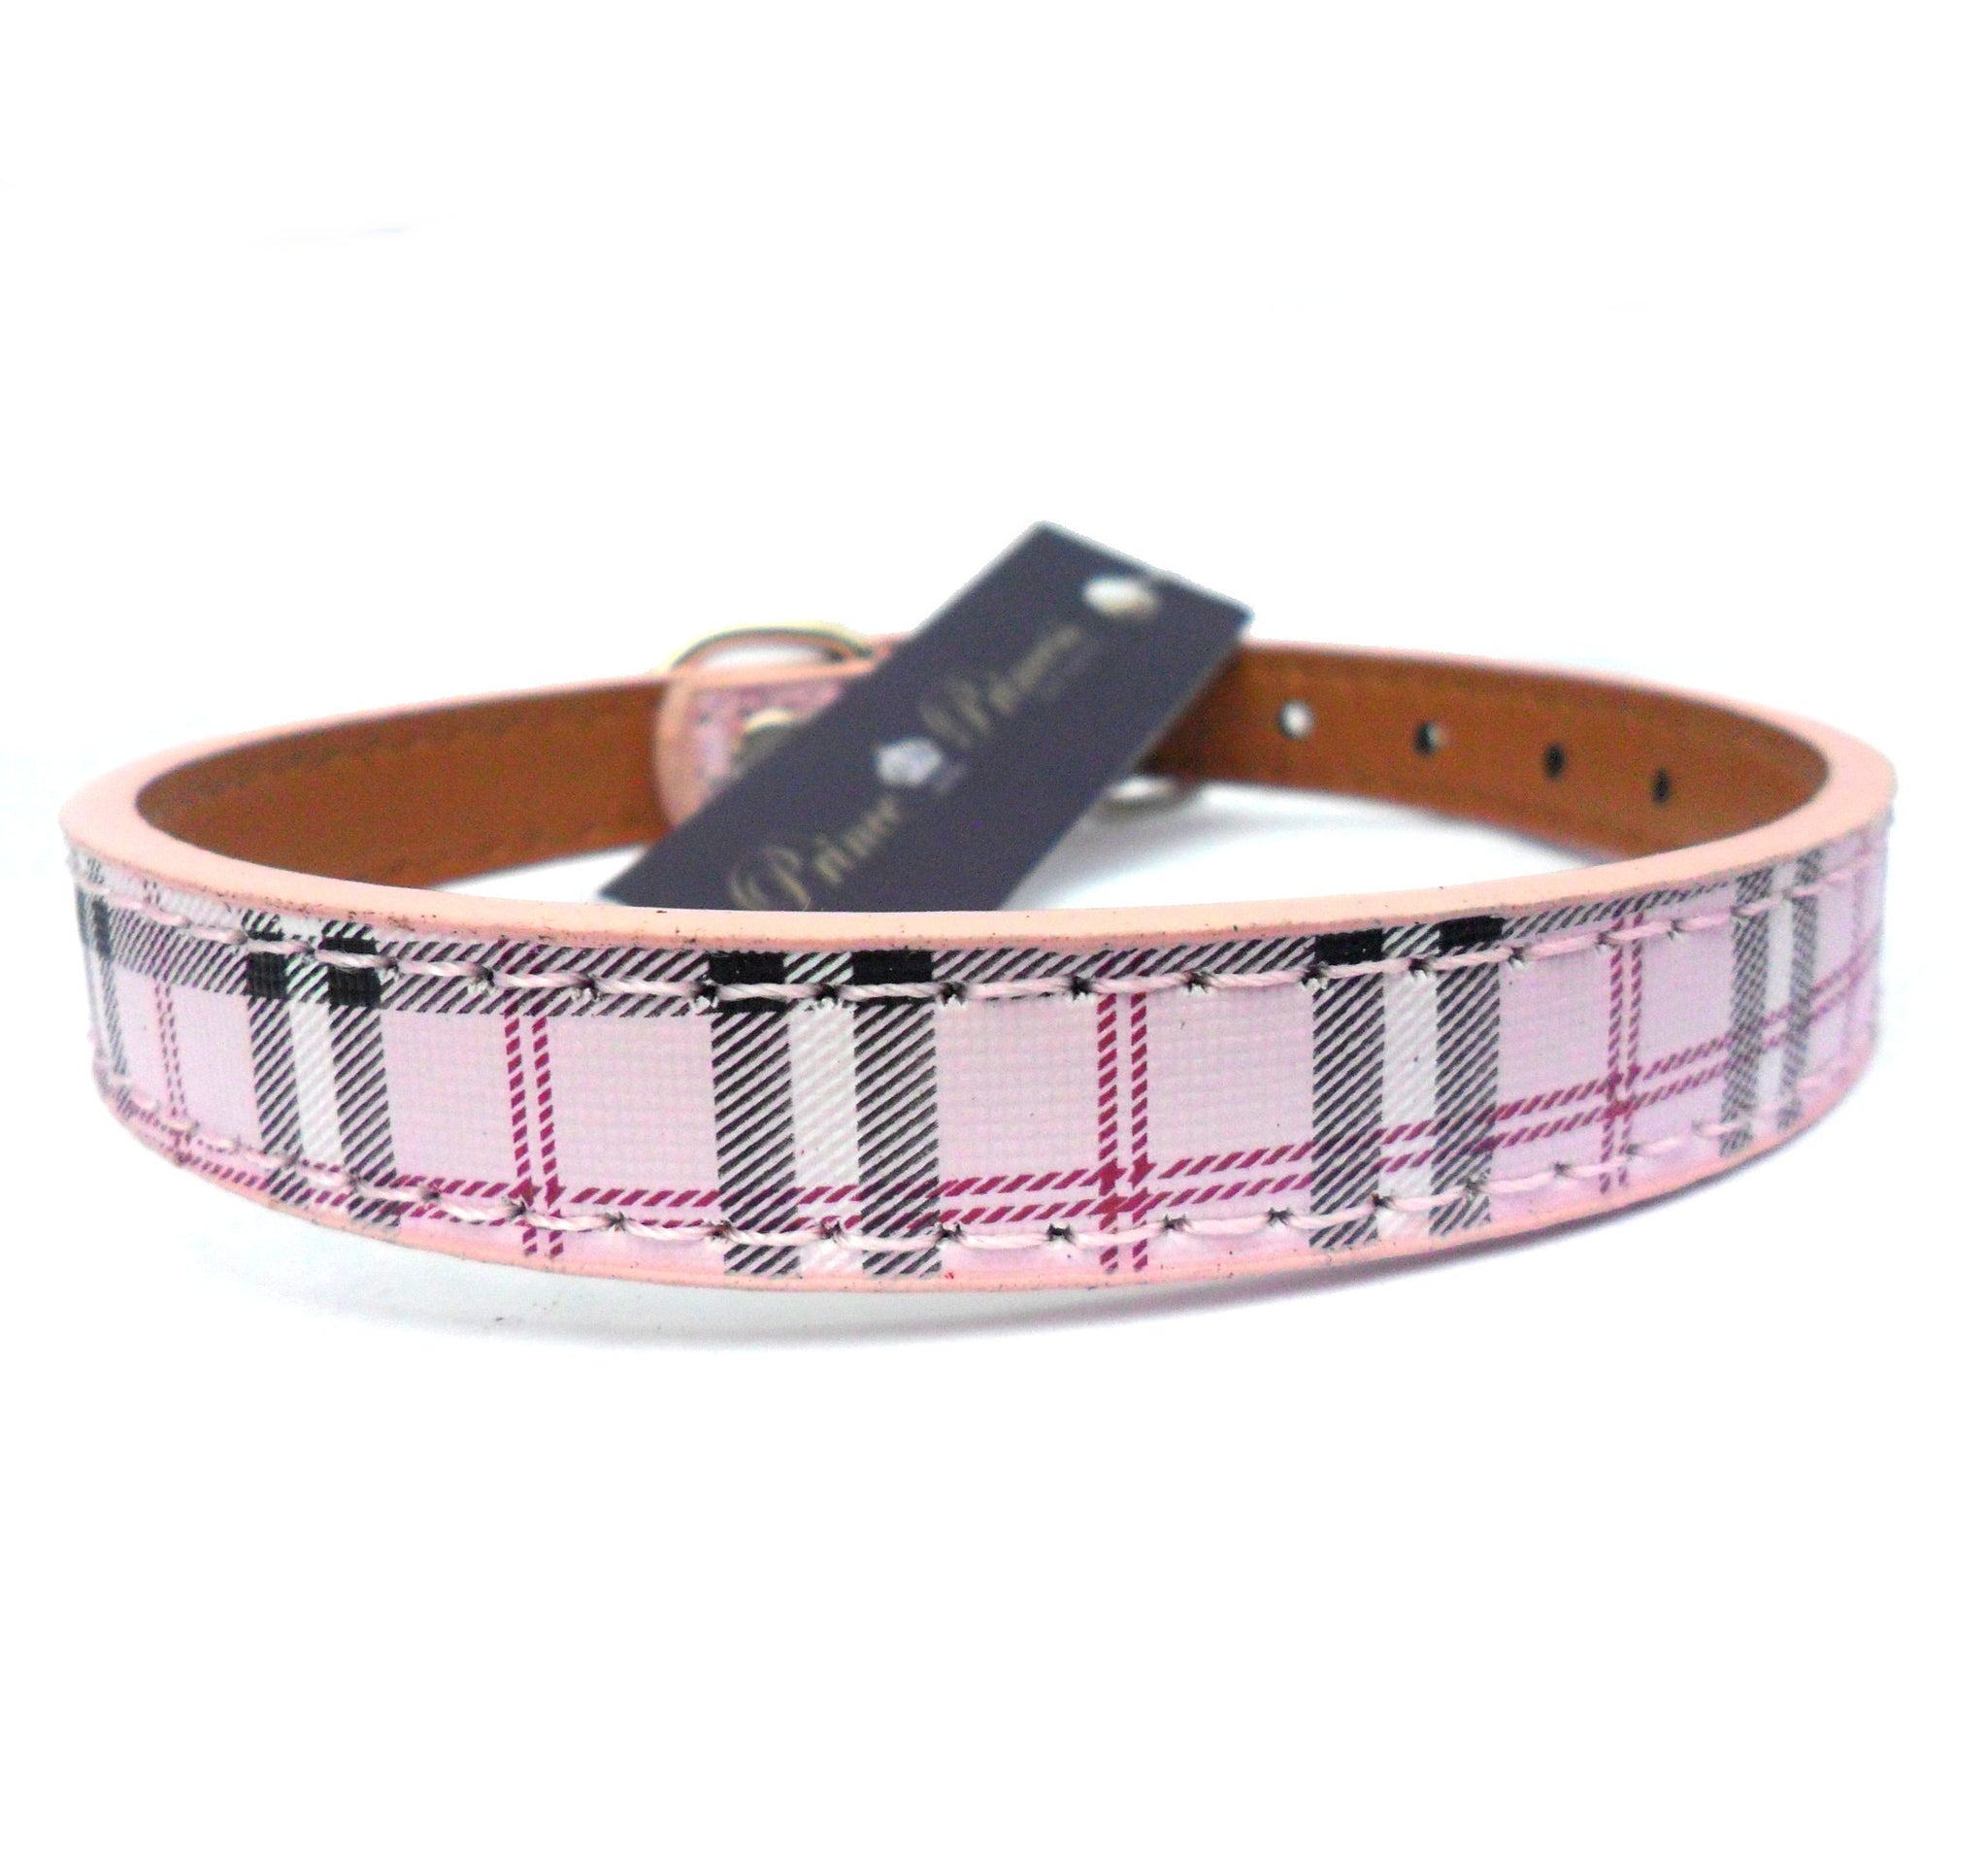 burberry style dog collar